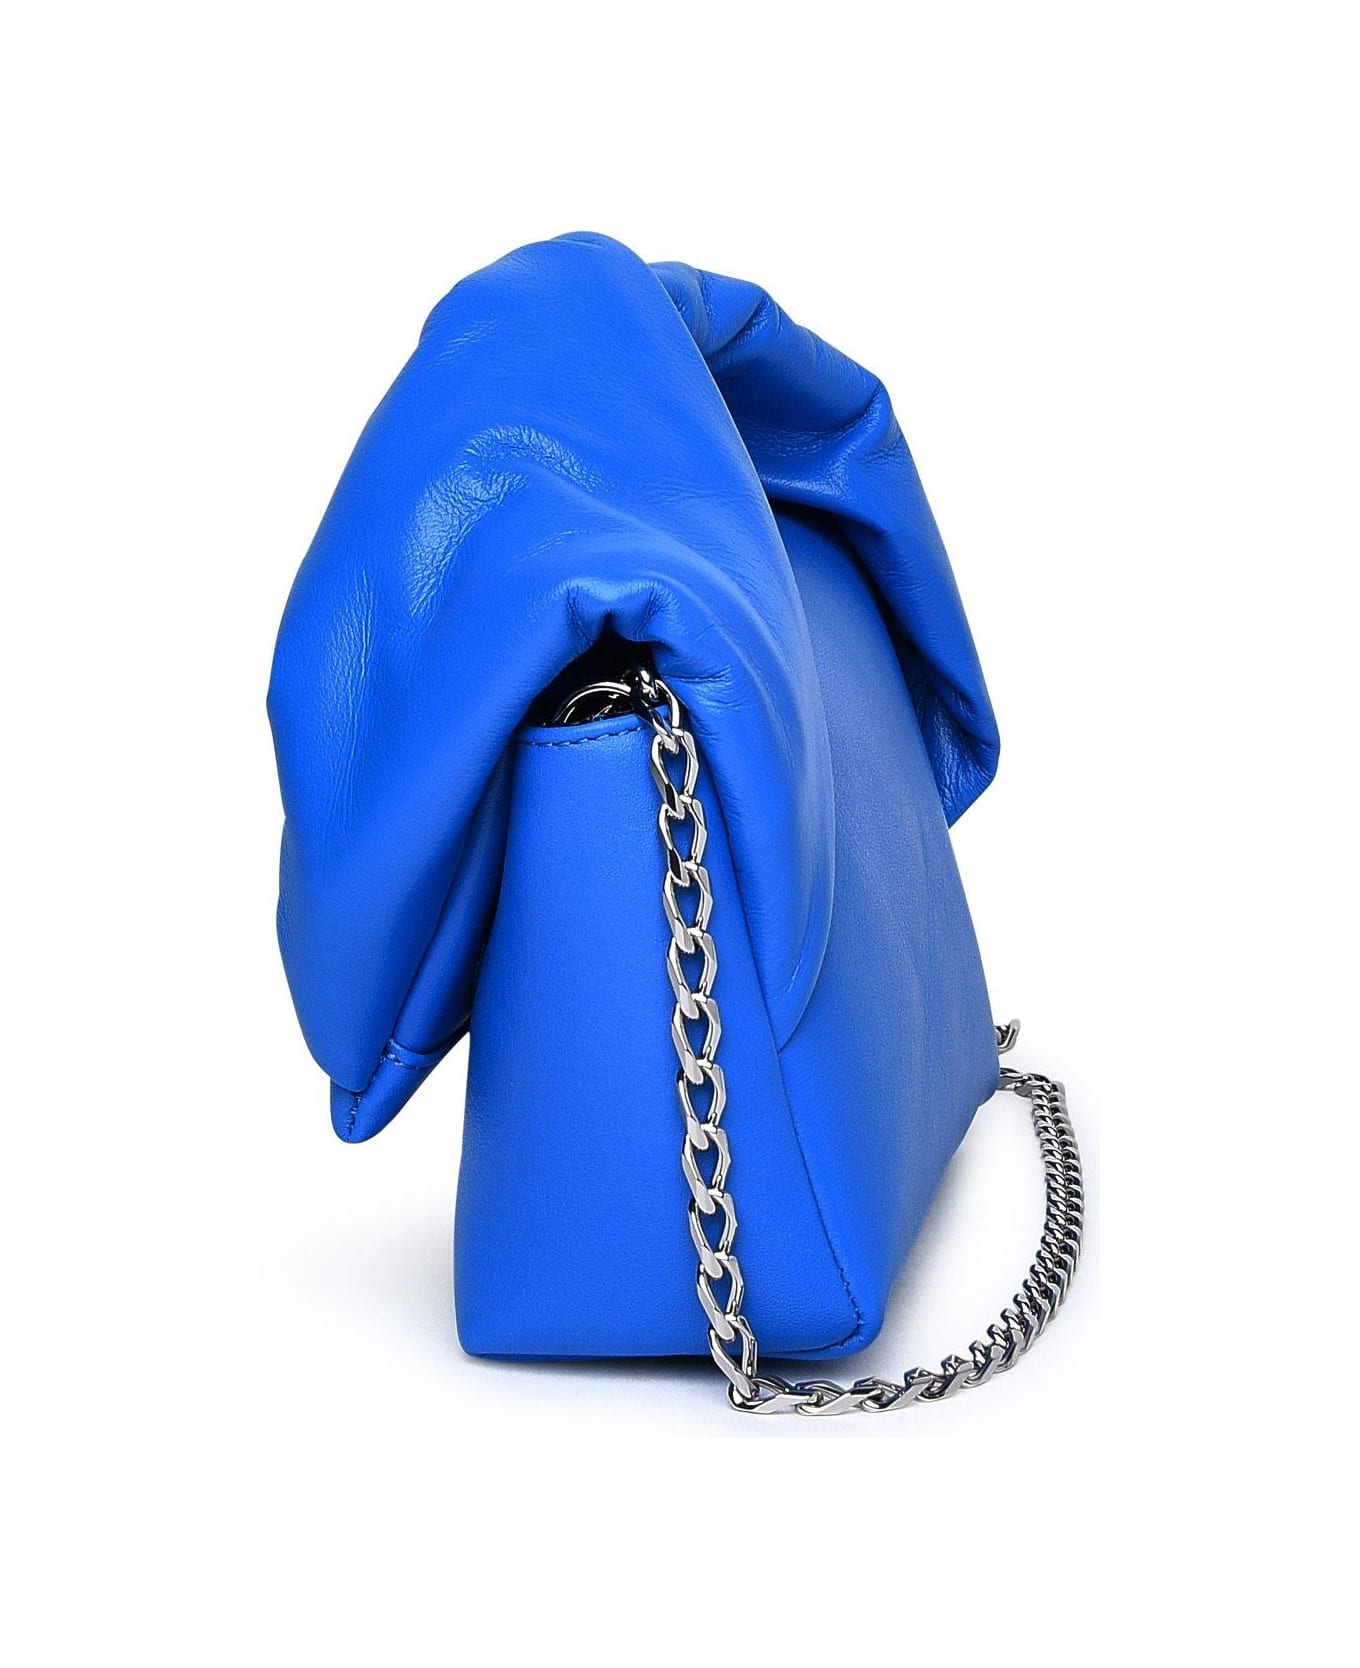 J.W. Anderson Small Twister Tote Bag - Blue